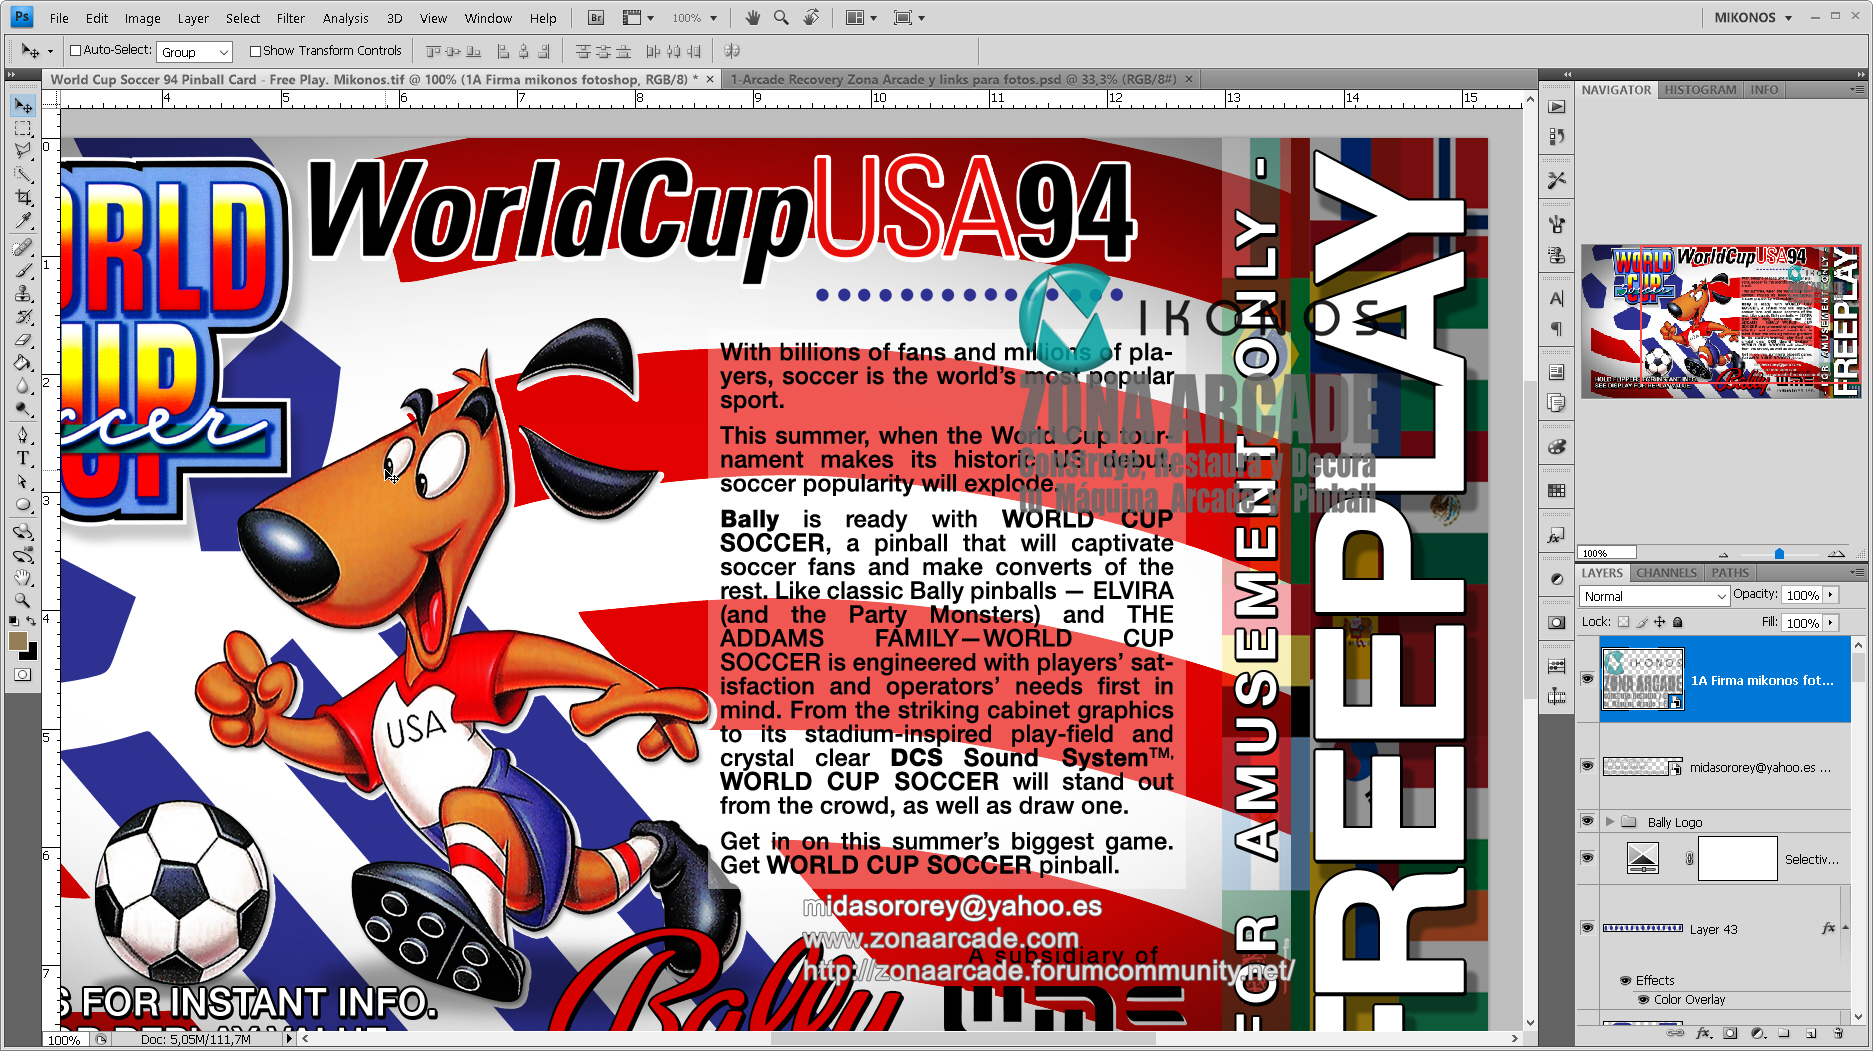 World Cup Soccer Pinball Card Customized - Free Play. Mikonos1